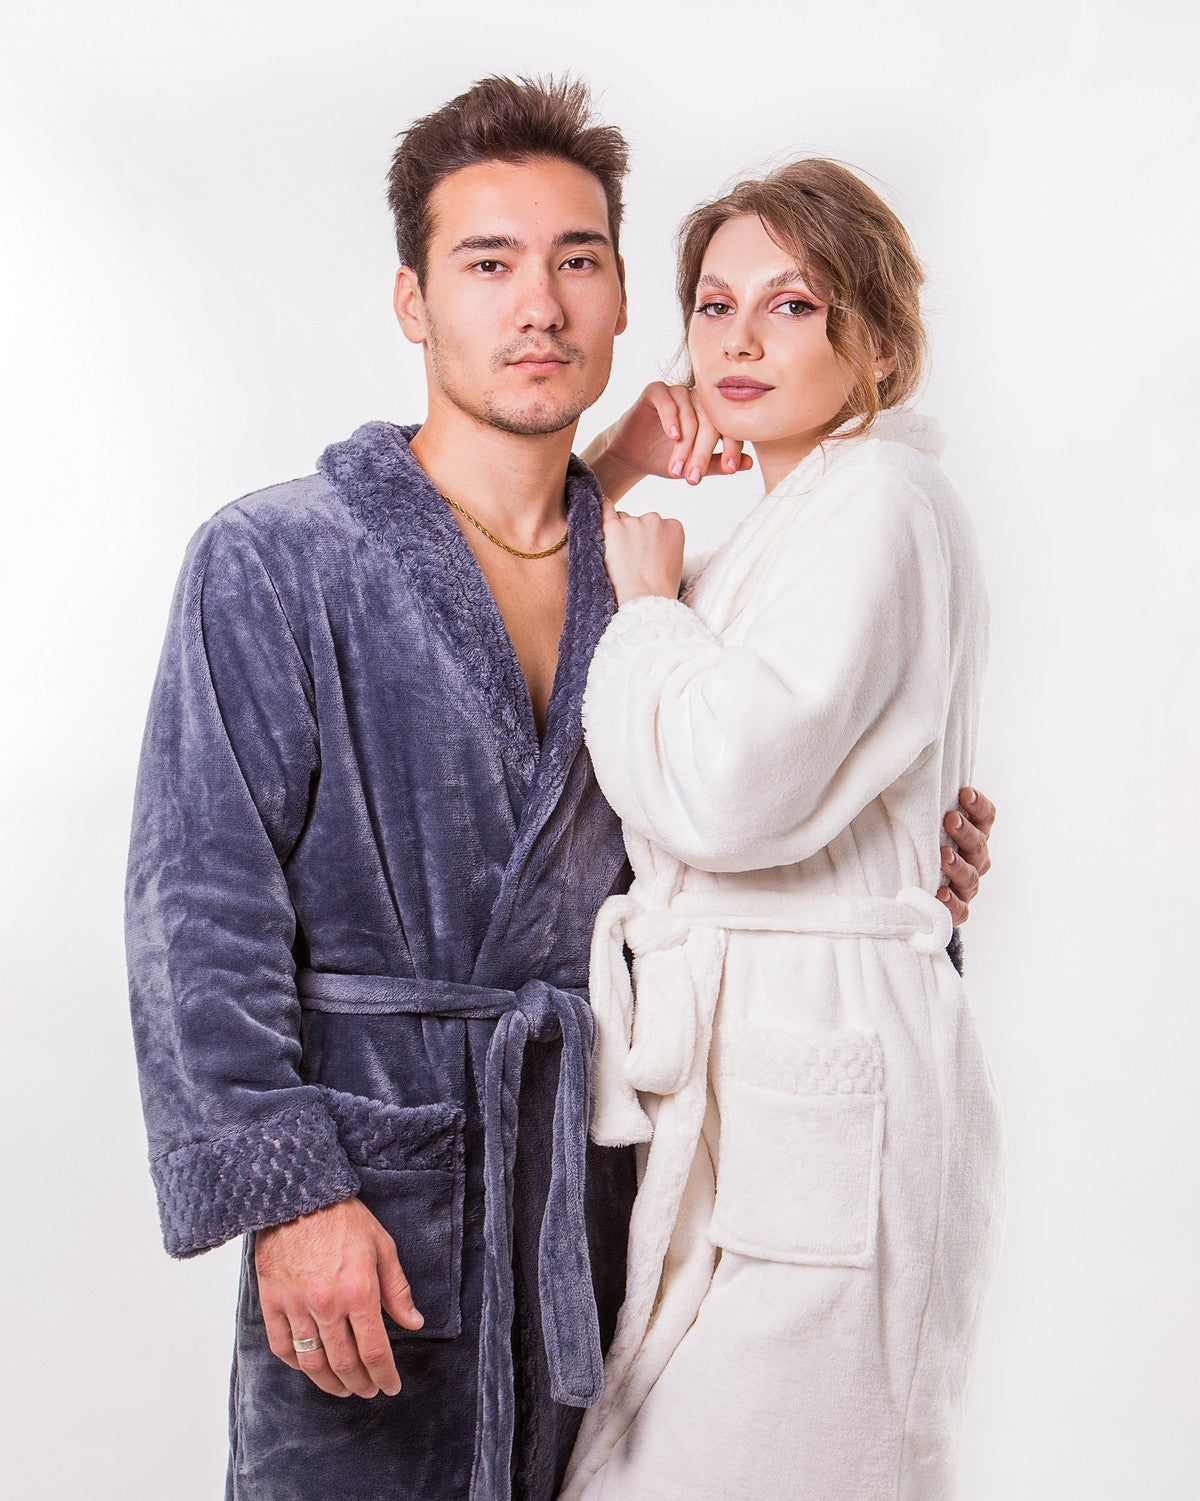 Men Fall Fashion Custom Bathrobe 100% Cotton Towelling Bath Robe